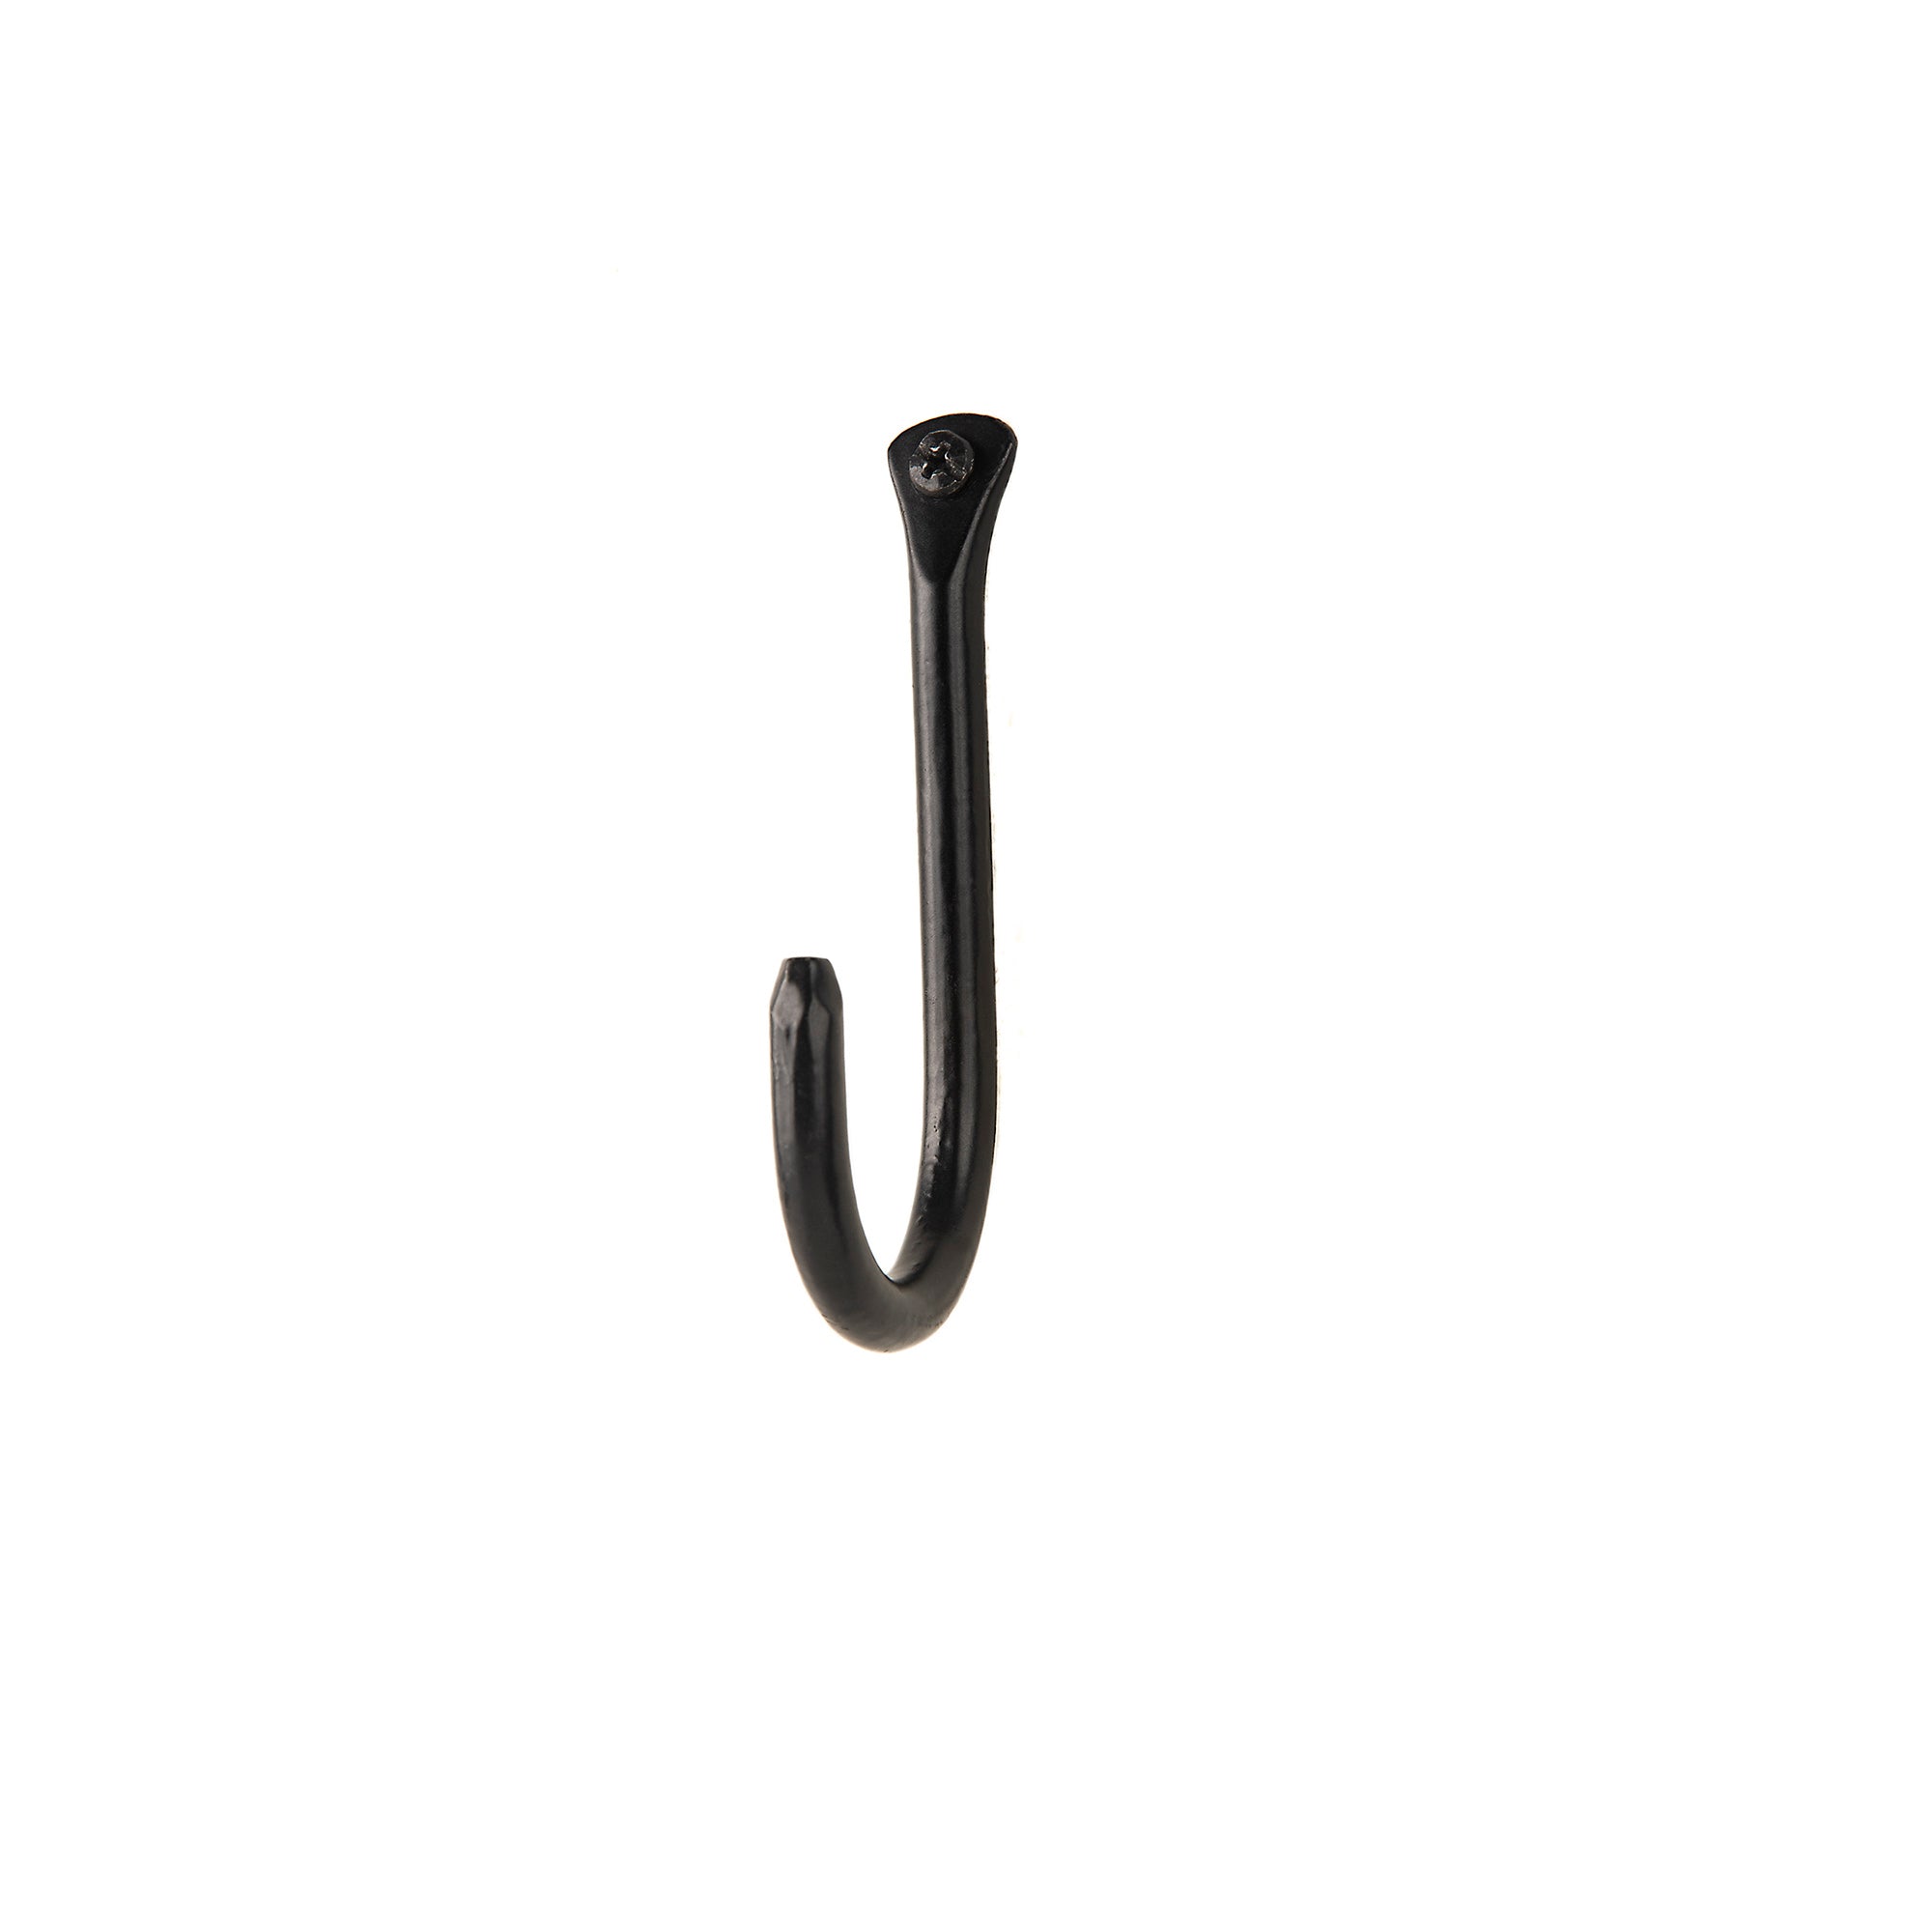 Artesano Iron Works 4 inch Round Hook AIW-HOR-4 / Black